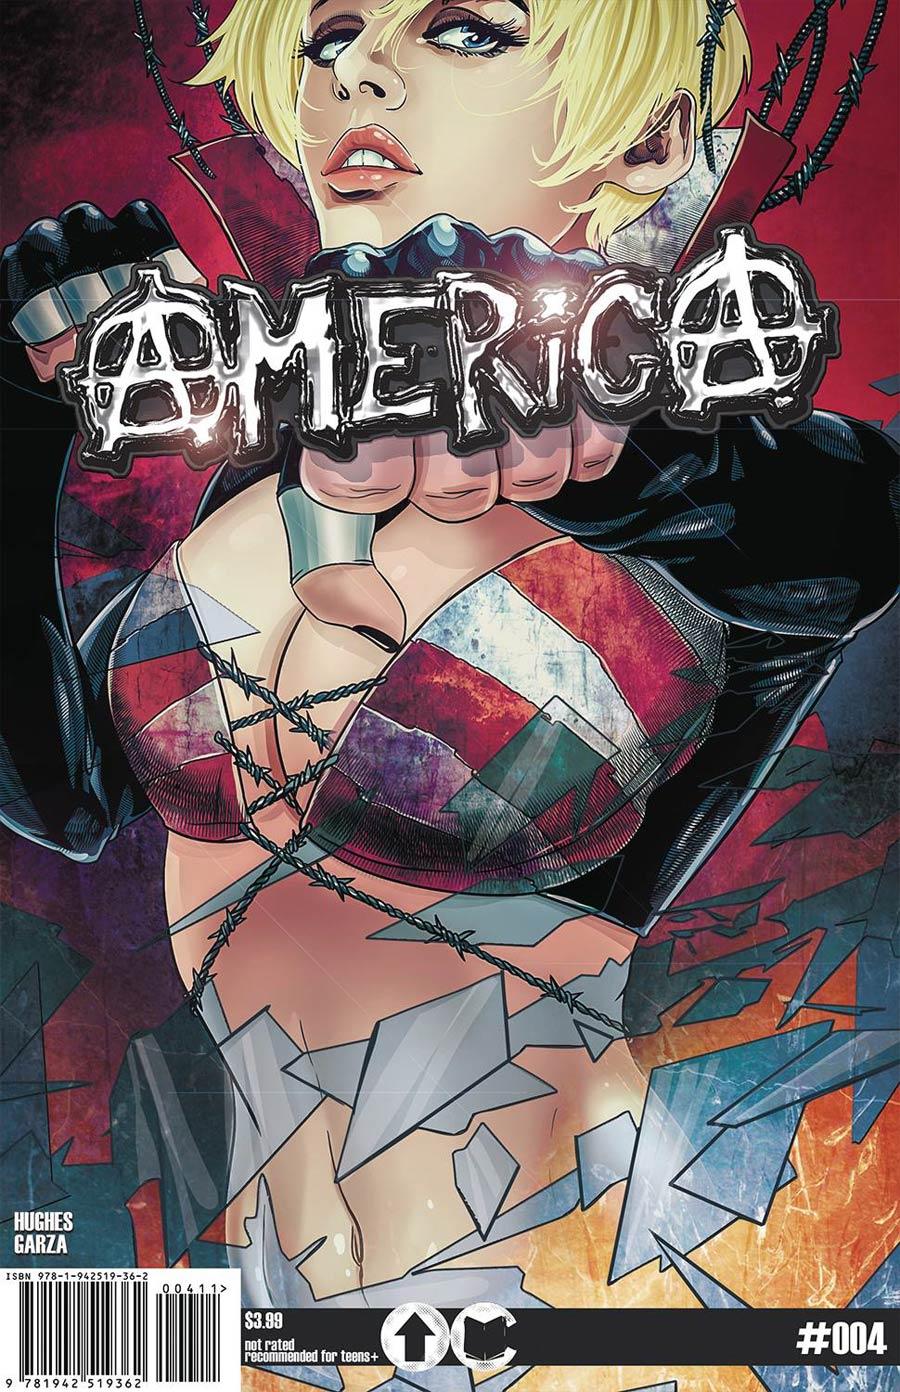 America (Overground Comics) Vol. 1 #4